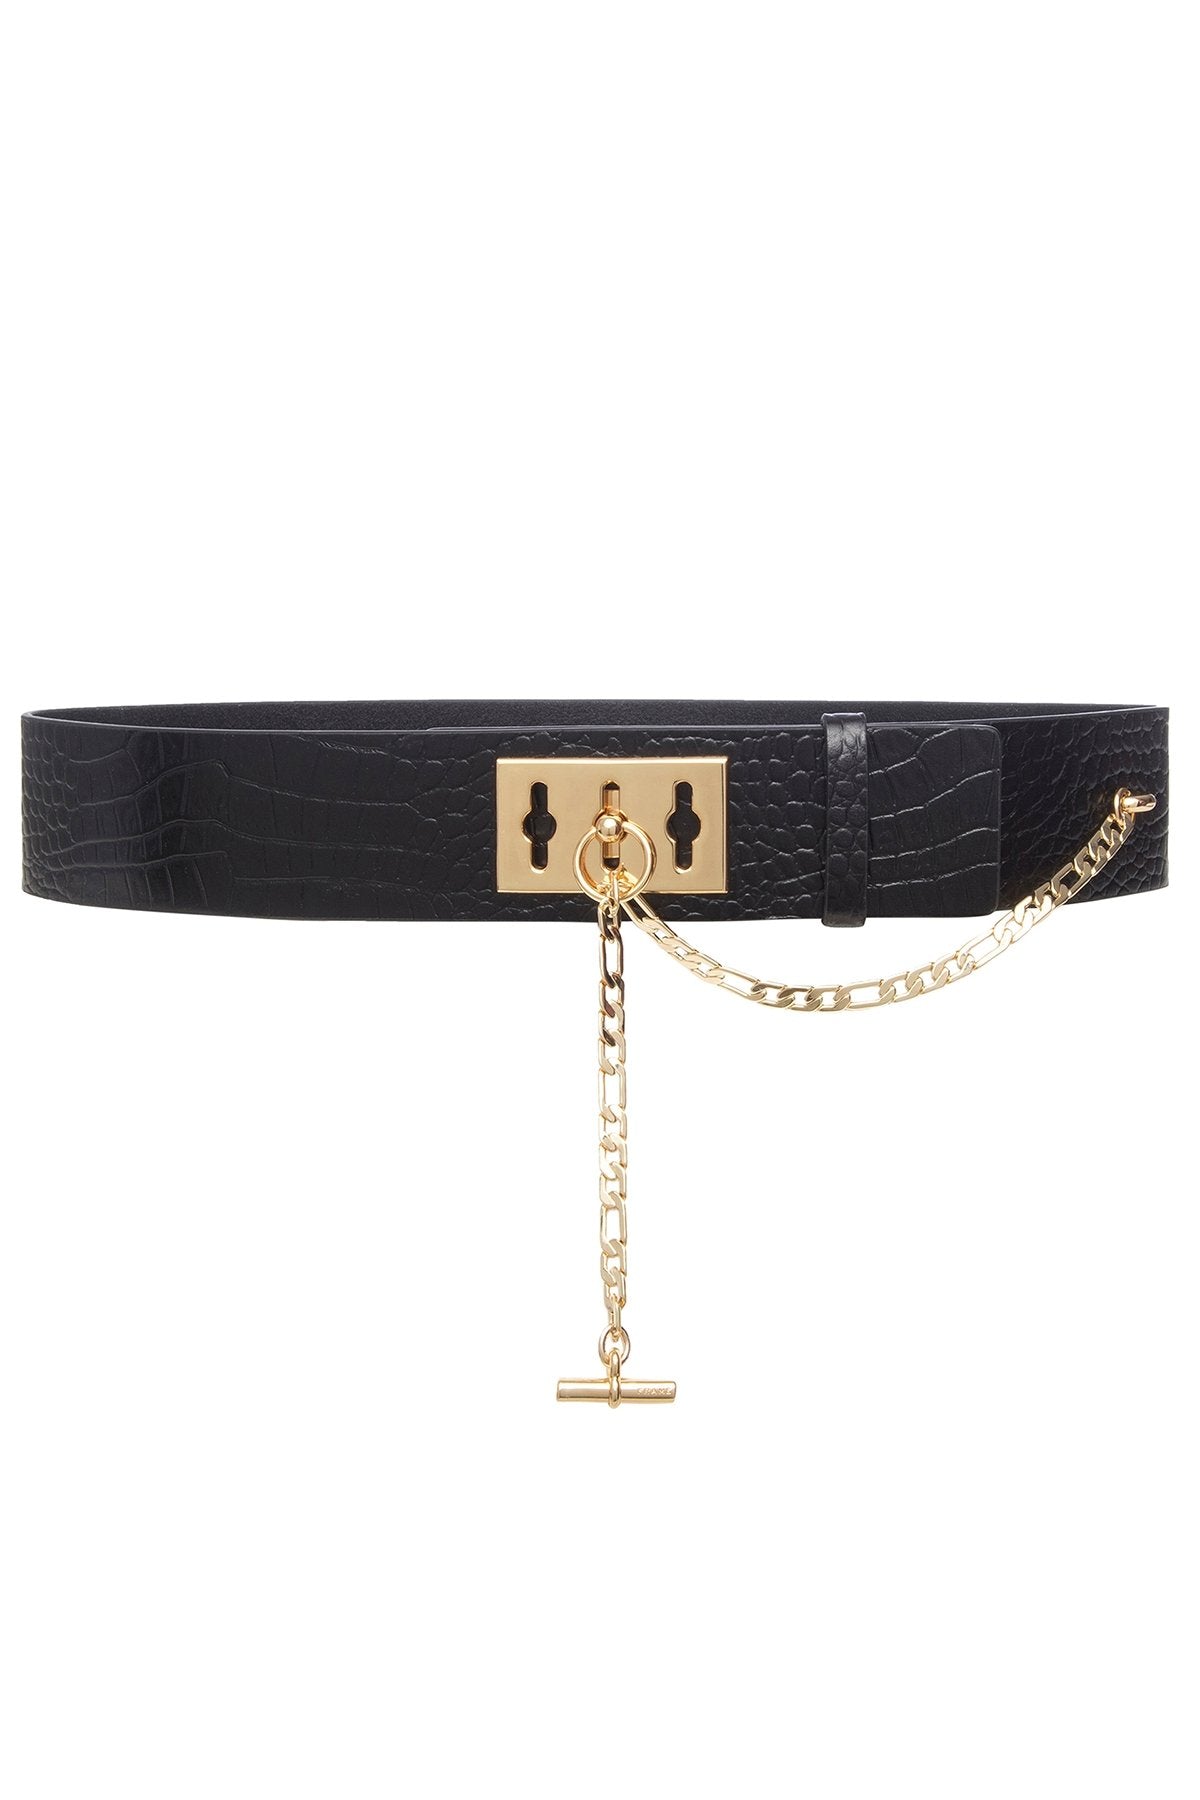 Le Chain Lock Waist Belt in Noir Croco - shop-olivia.com